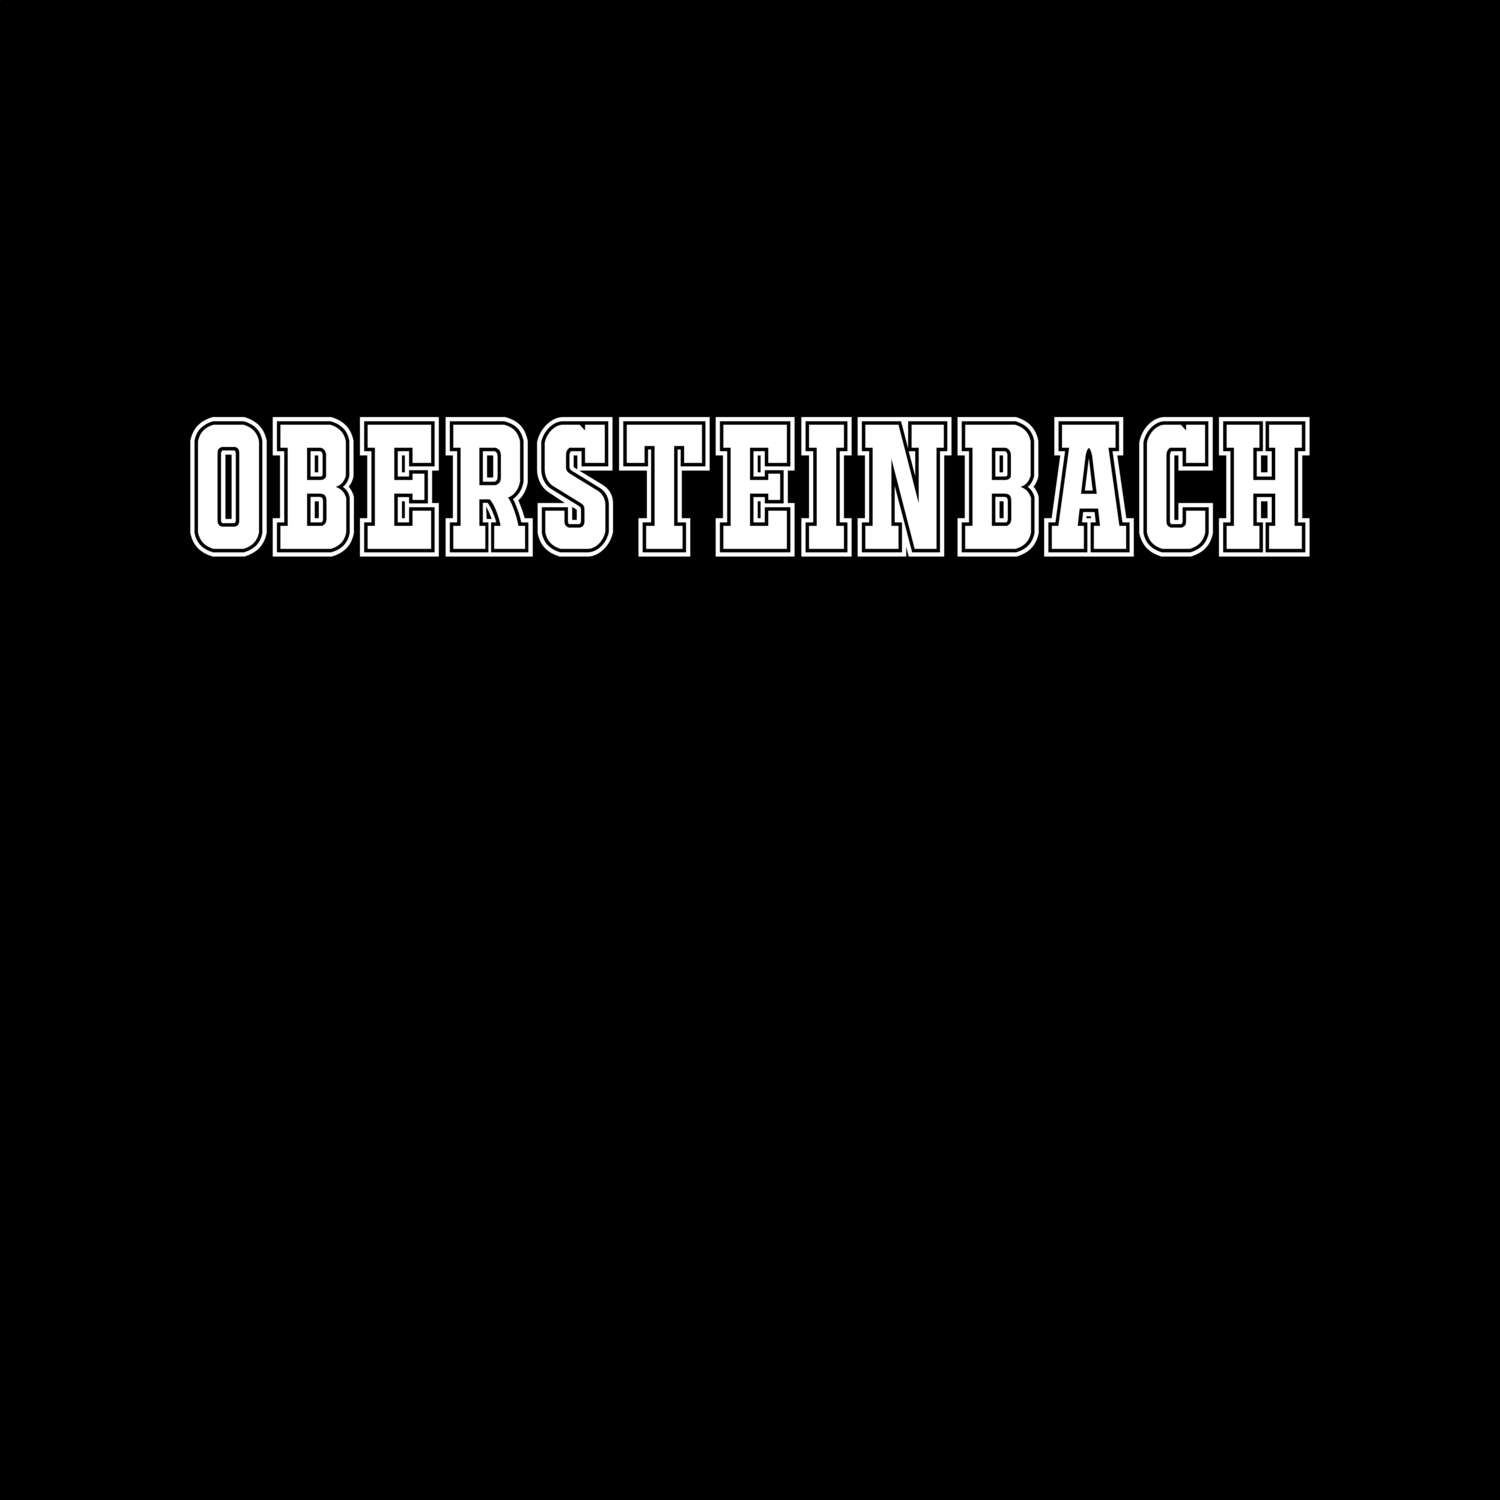 Obersteinbach T-Shirt »Classic«